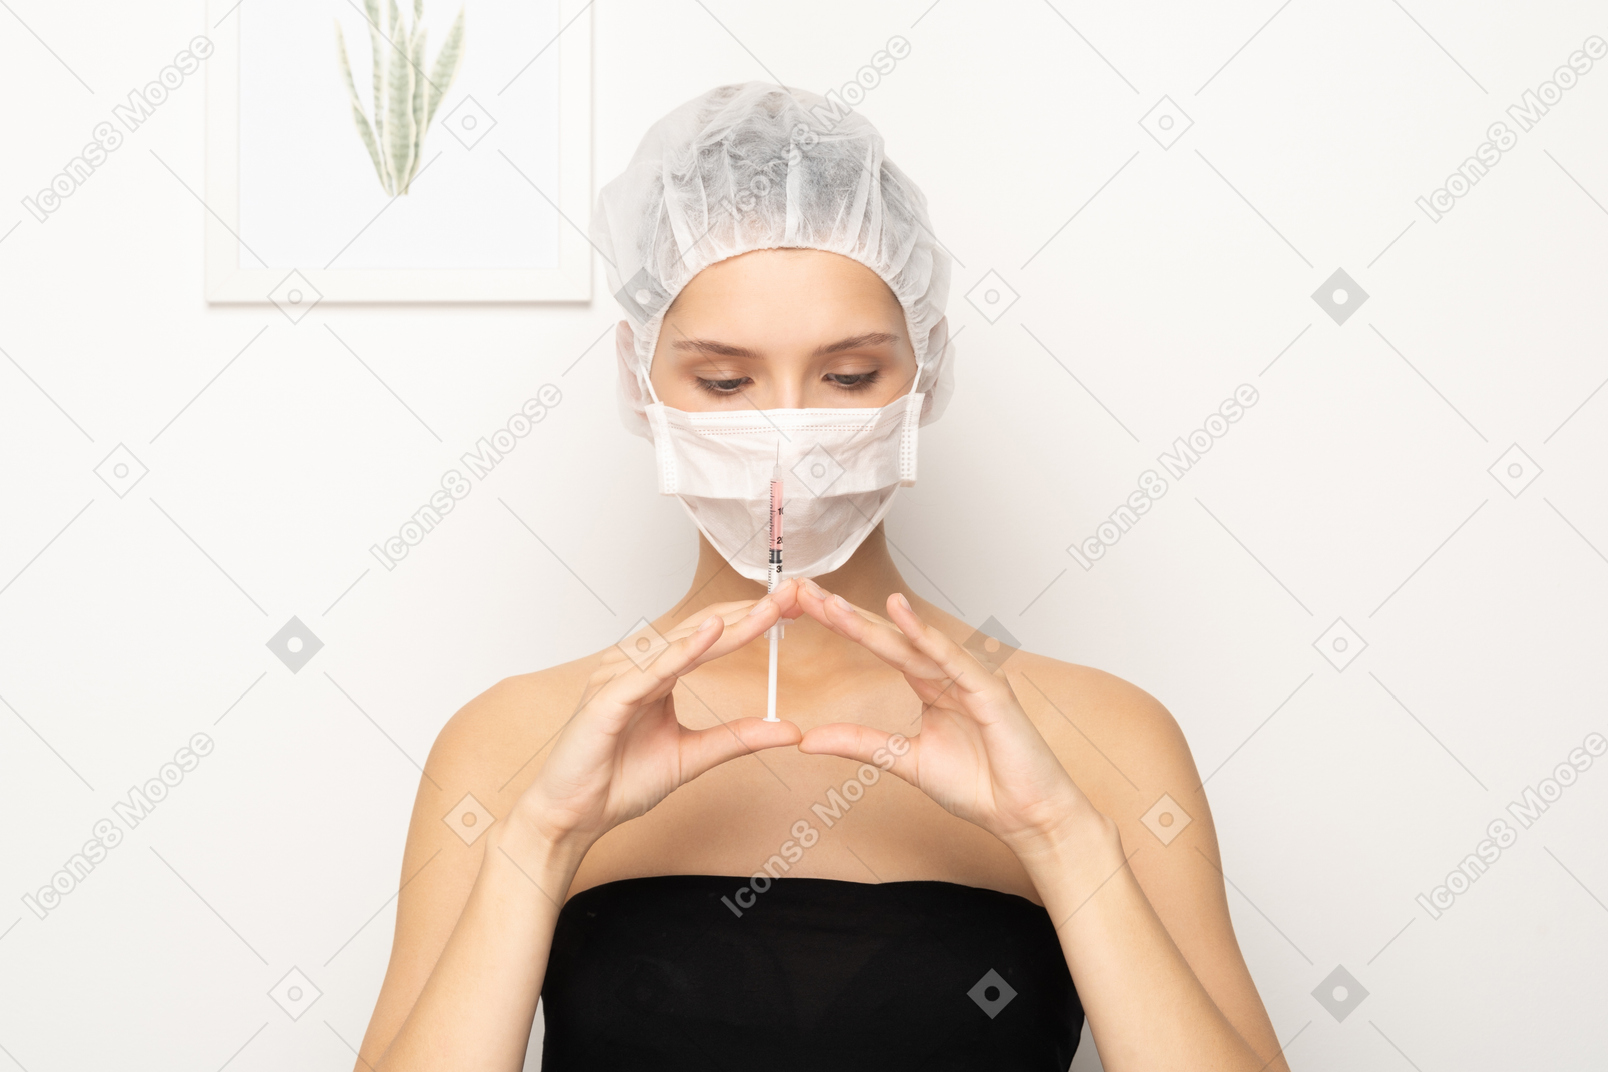 Woman in mask holding syringe